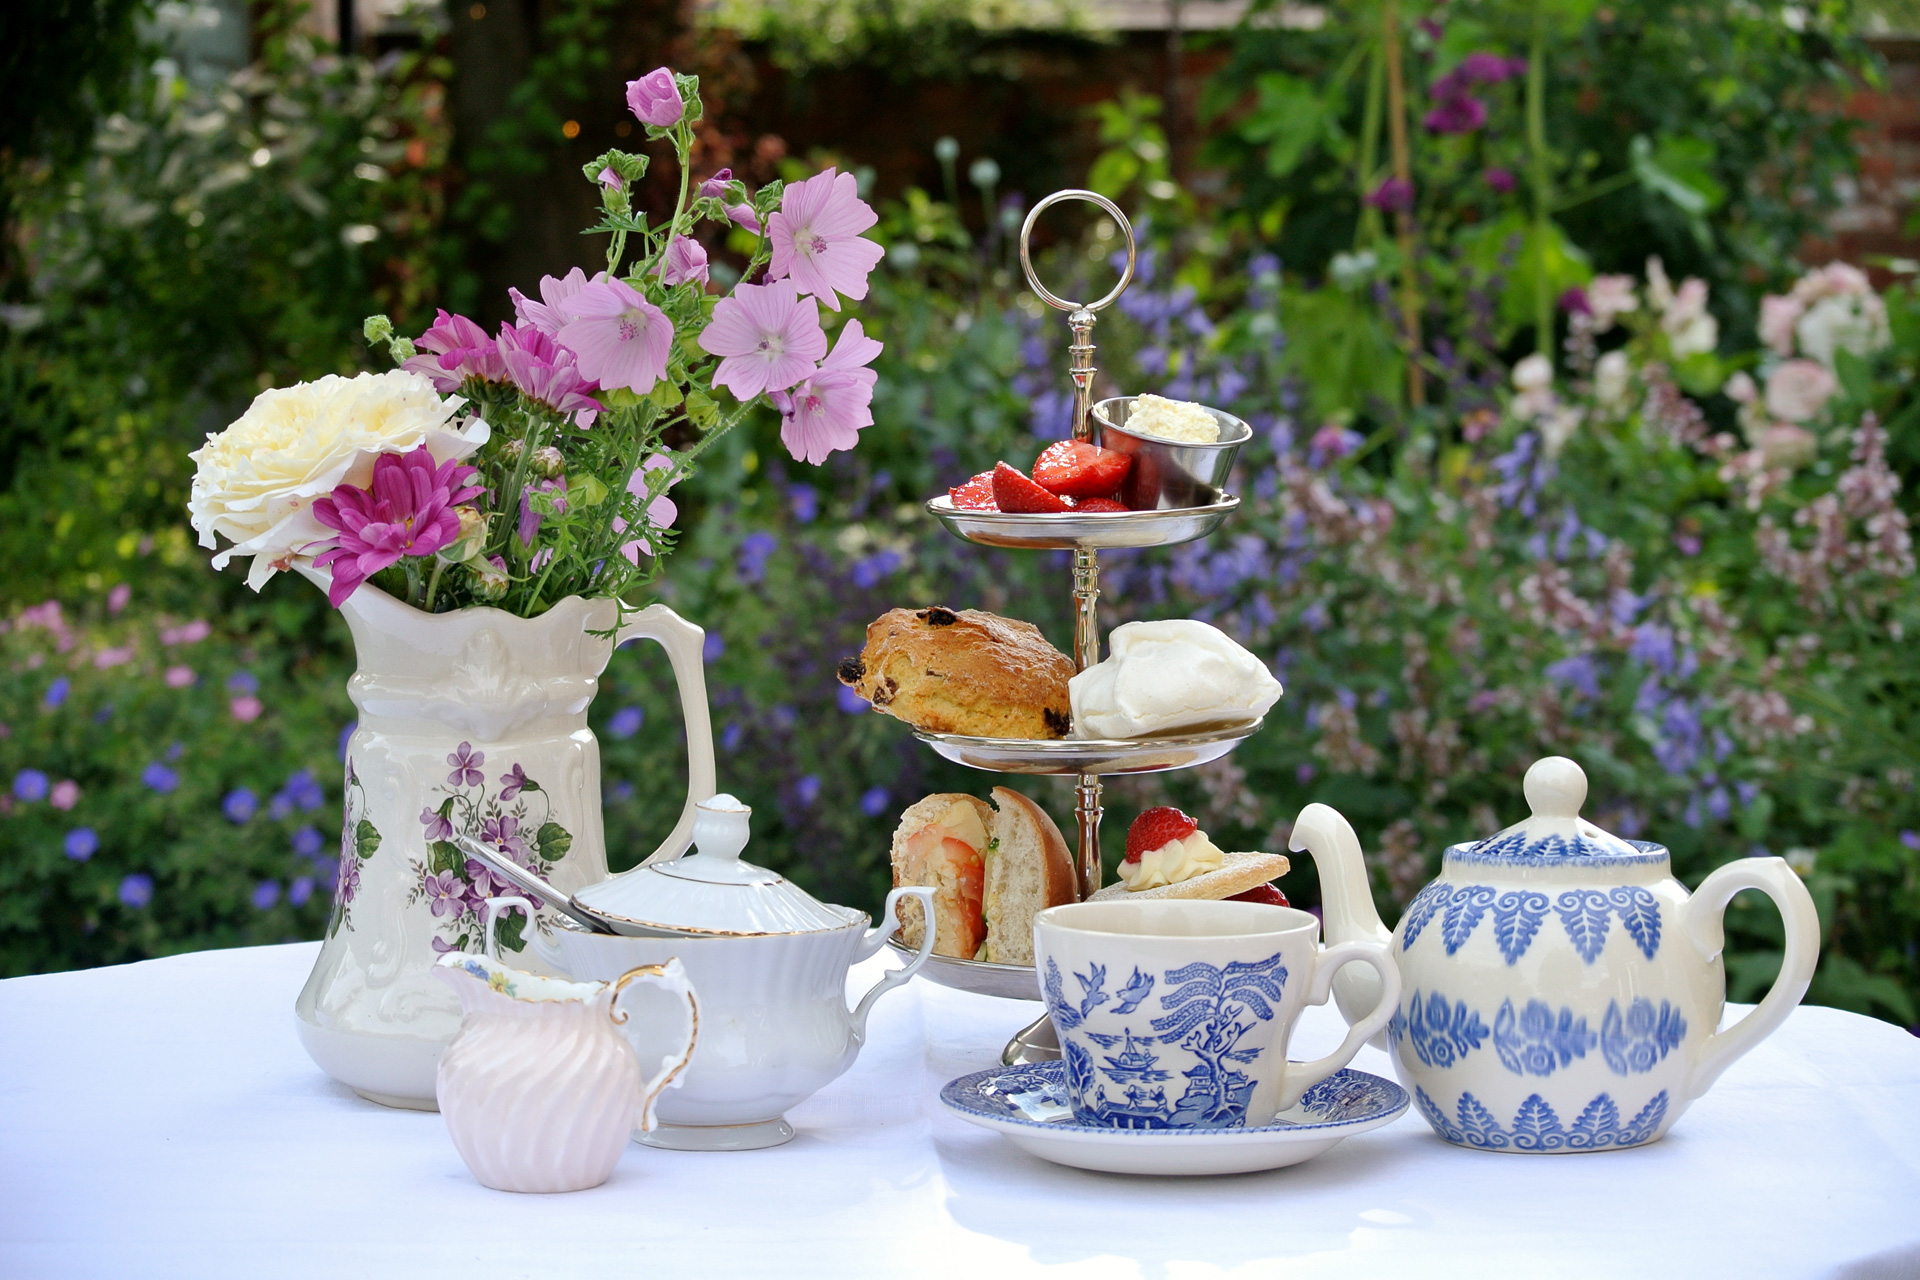 Afternoon tea in an English garden